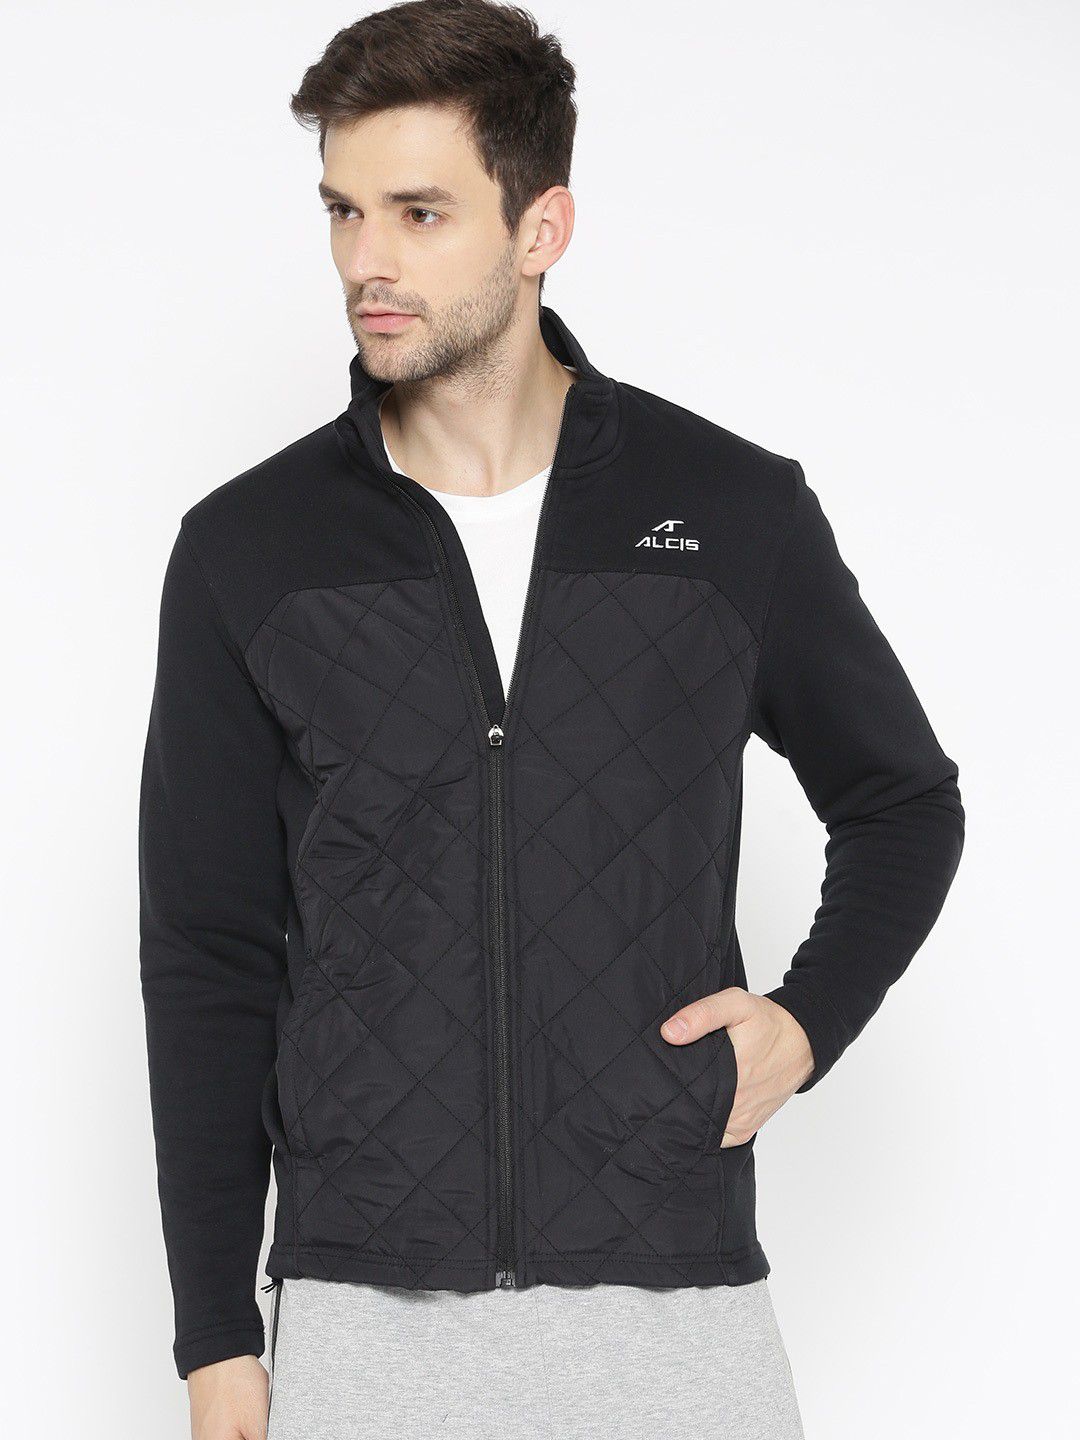 Alcis Black Cotton Polyester Fleece Jacket Single Pack